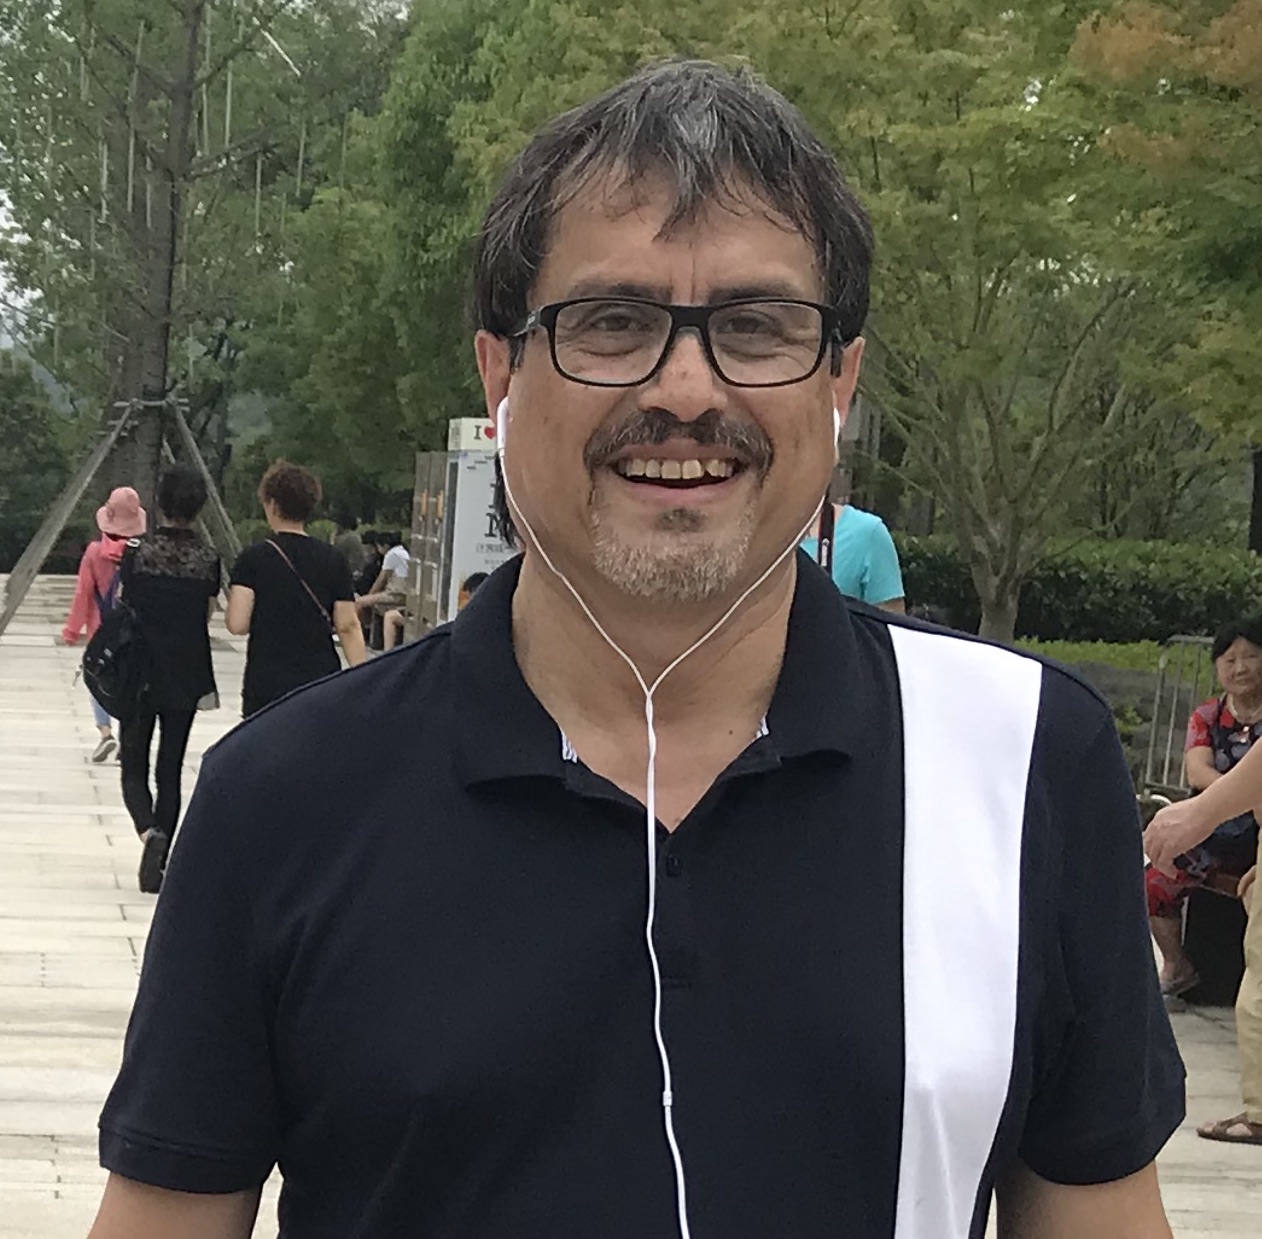 Luis Herrera-Estrella Director of the Institute of Genomics for Crop Abiotic Stress Tolerance